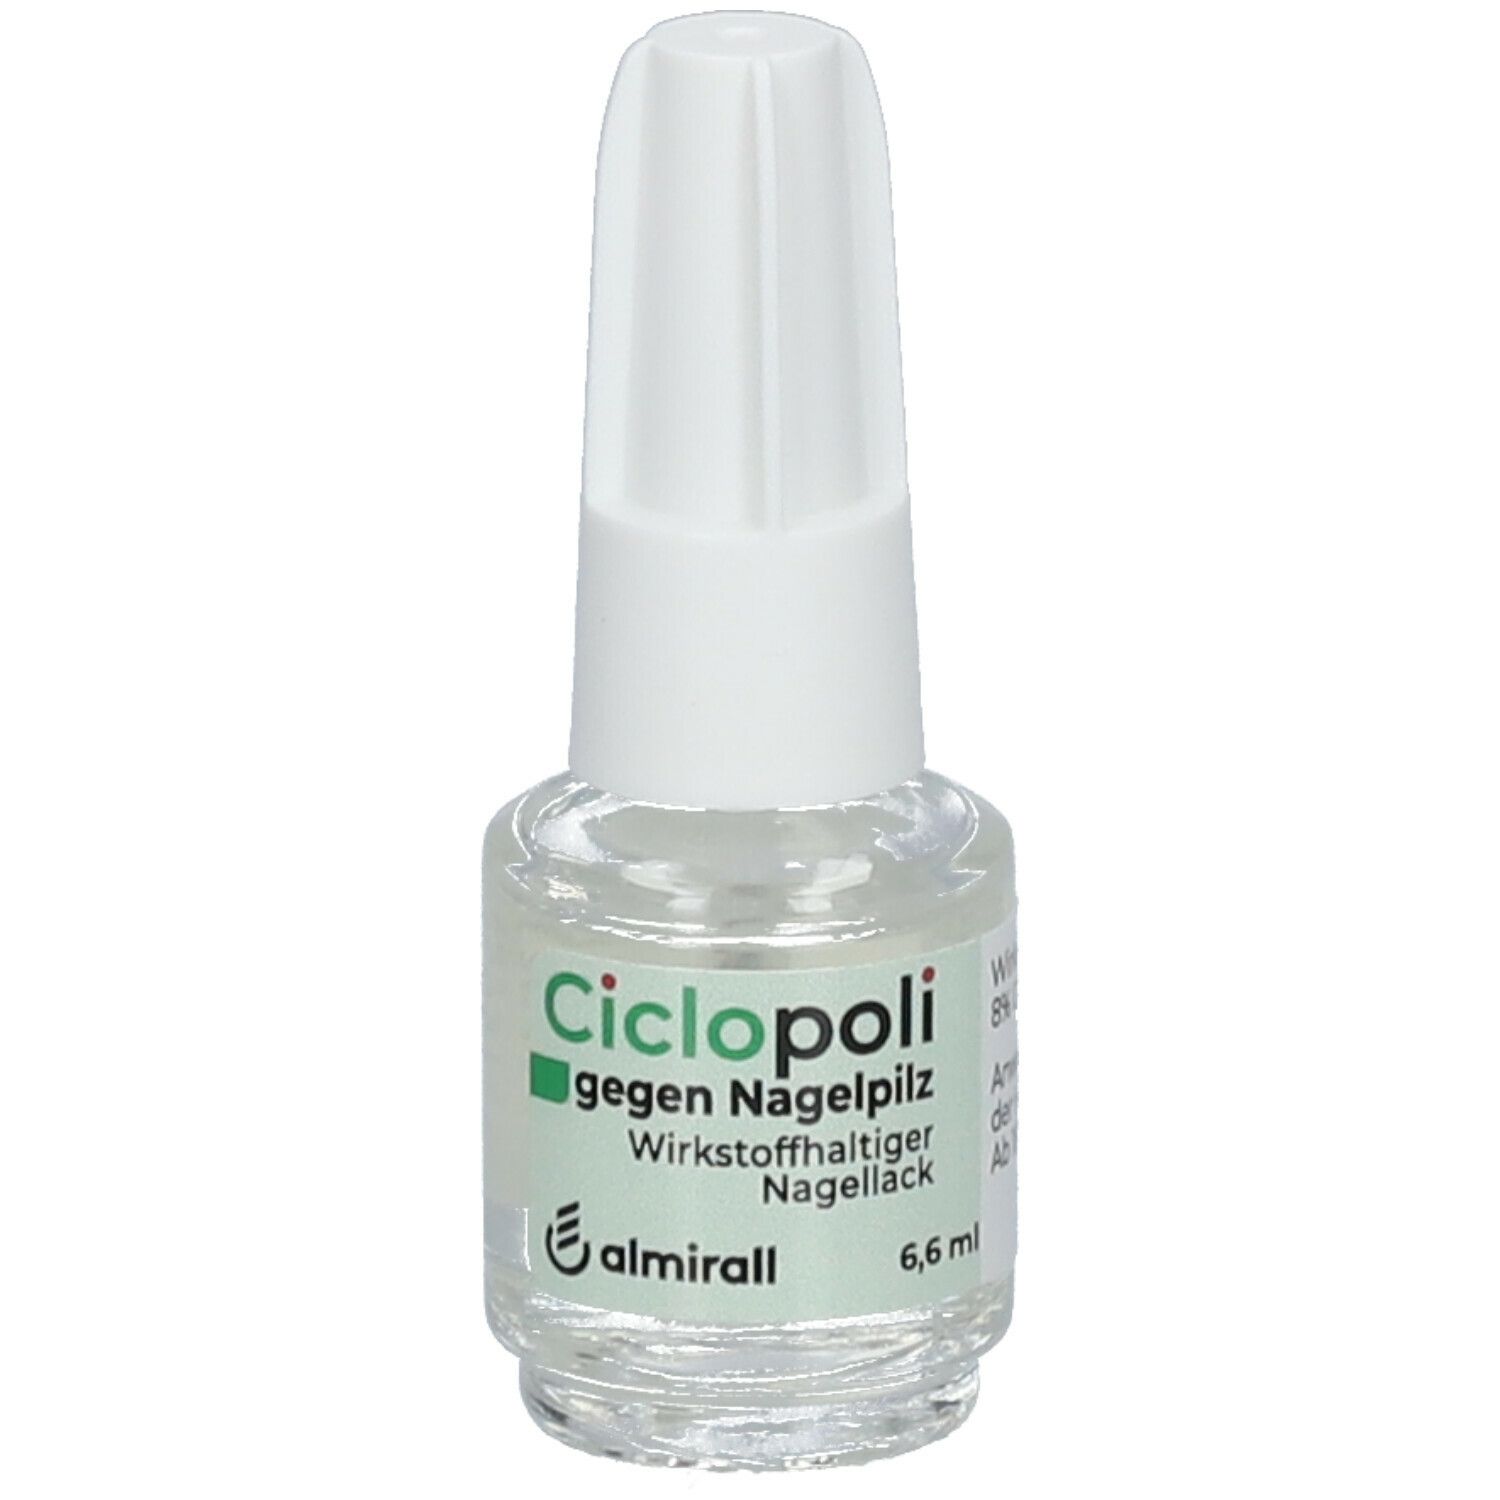 Ciclopoli® gegen Nagelpilz